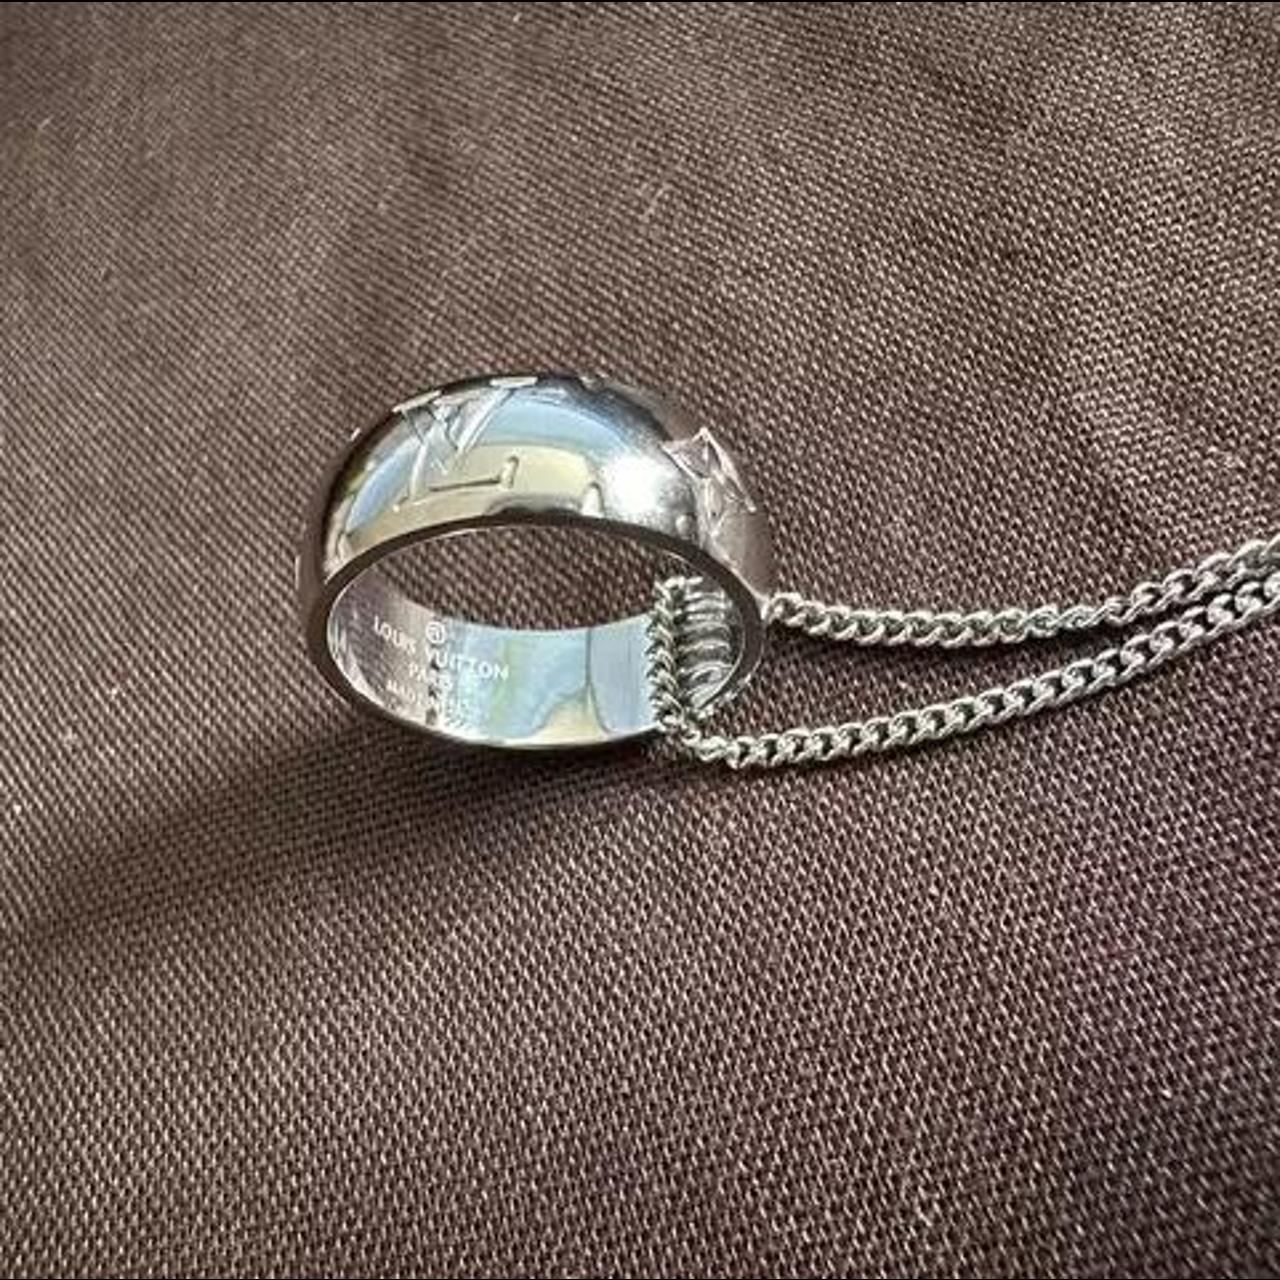 LV Monogram Charm Necklace - Depop